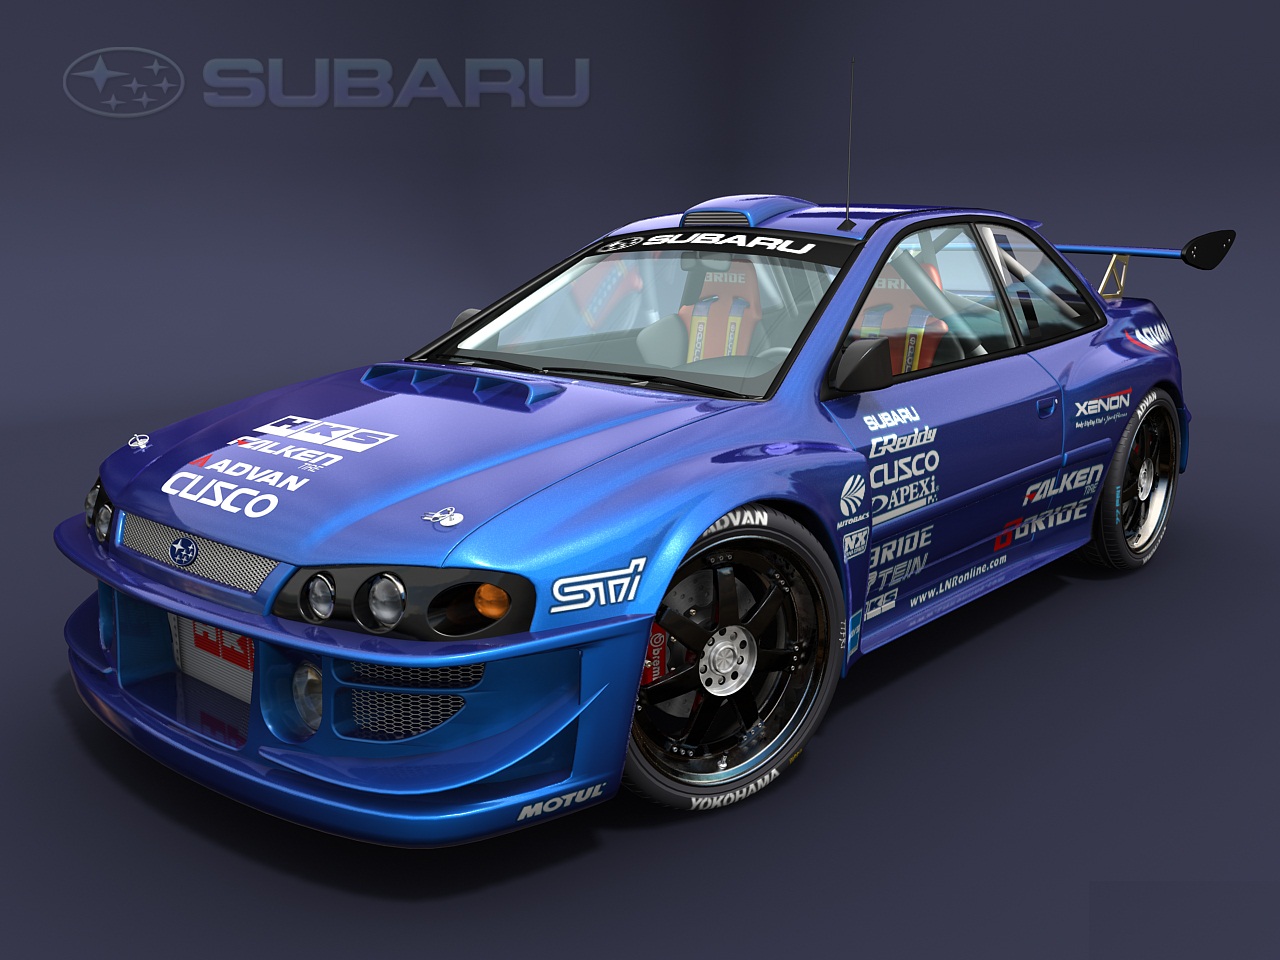 Subaru Impreza-HD Wallpapers